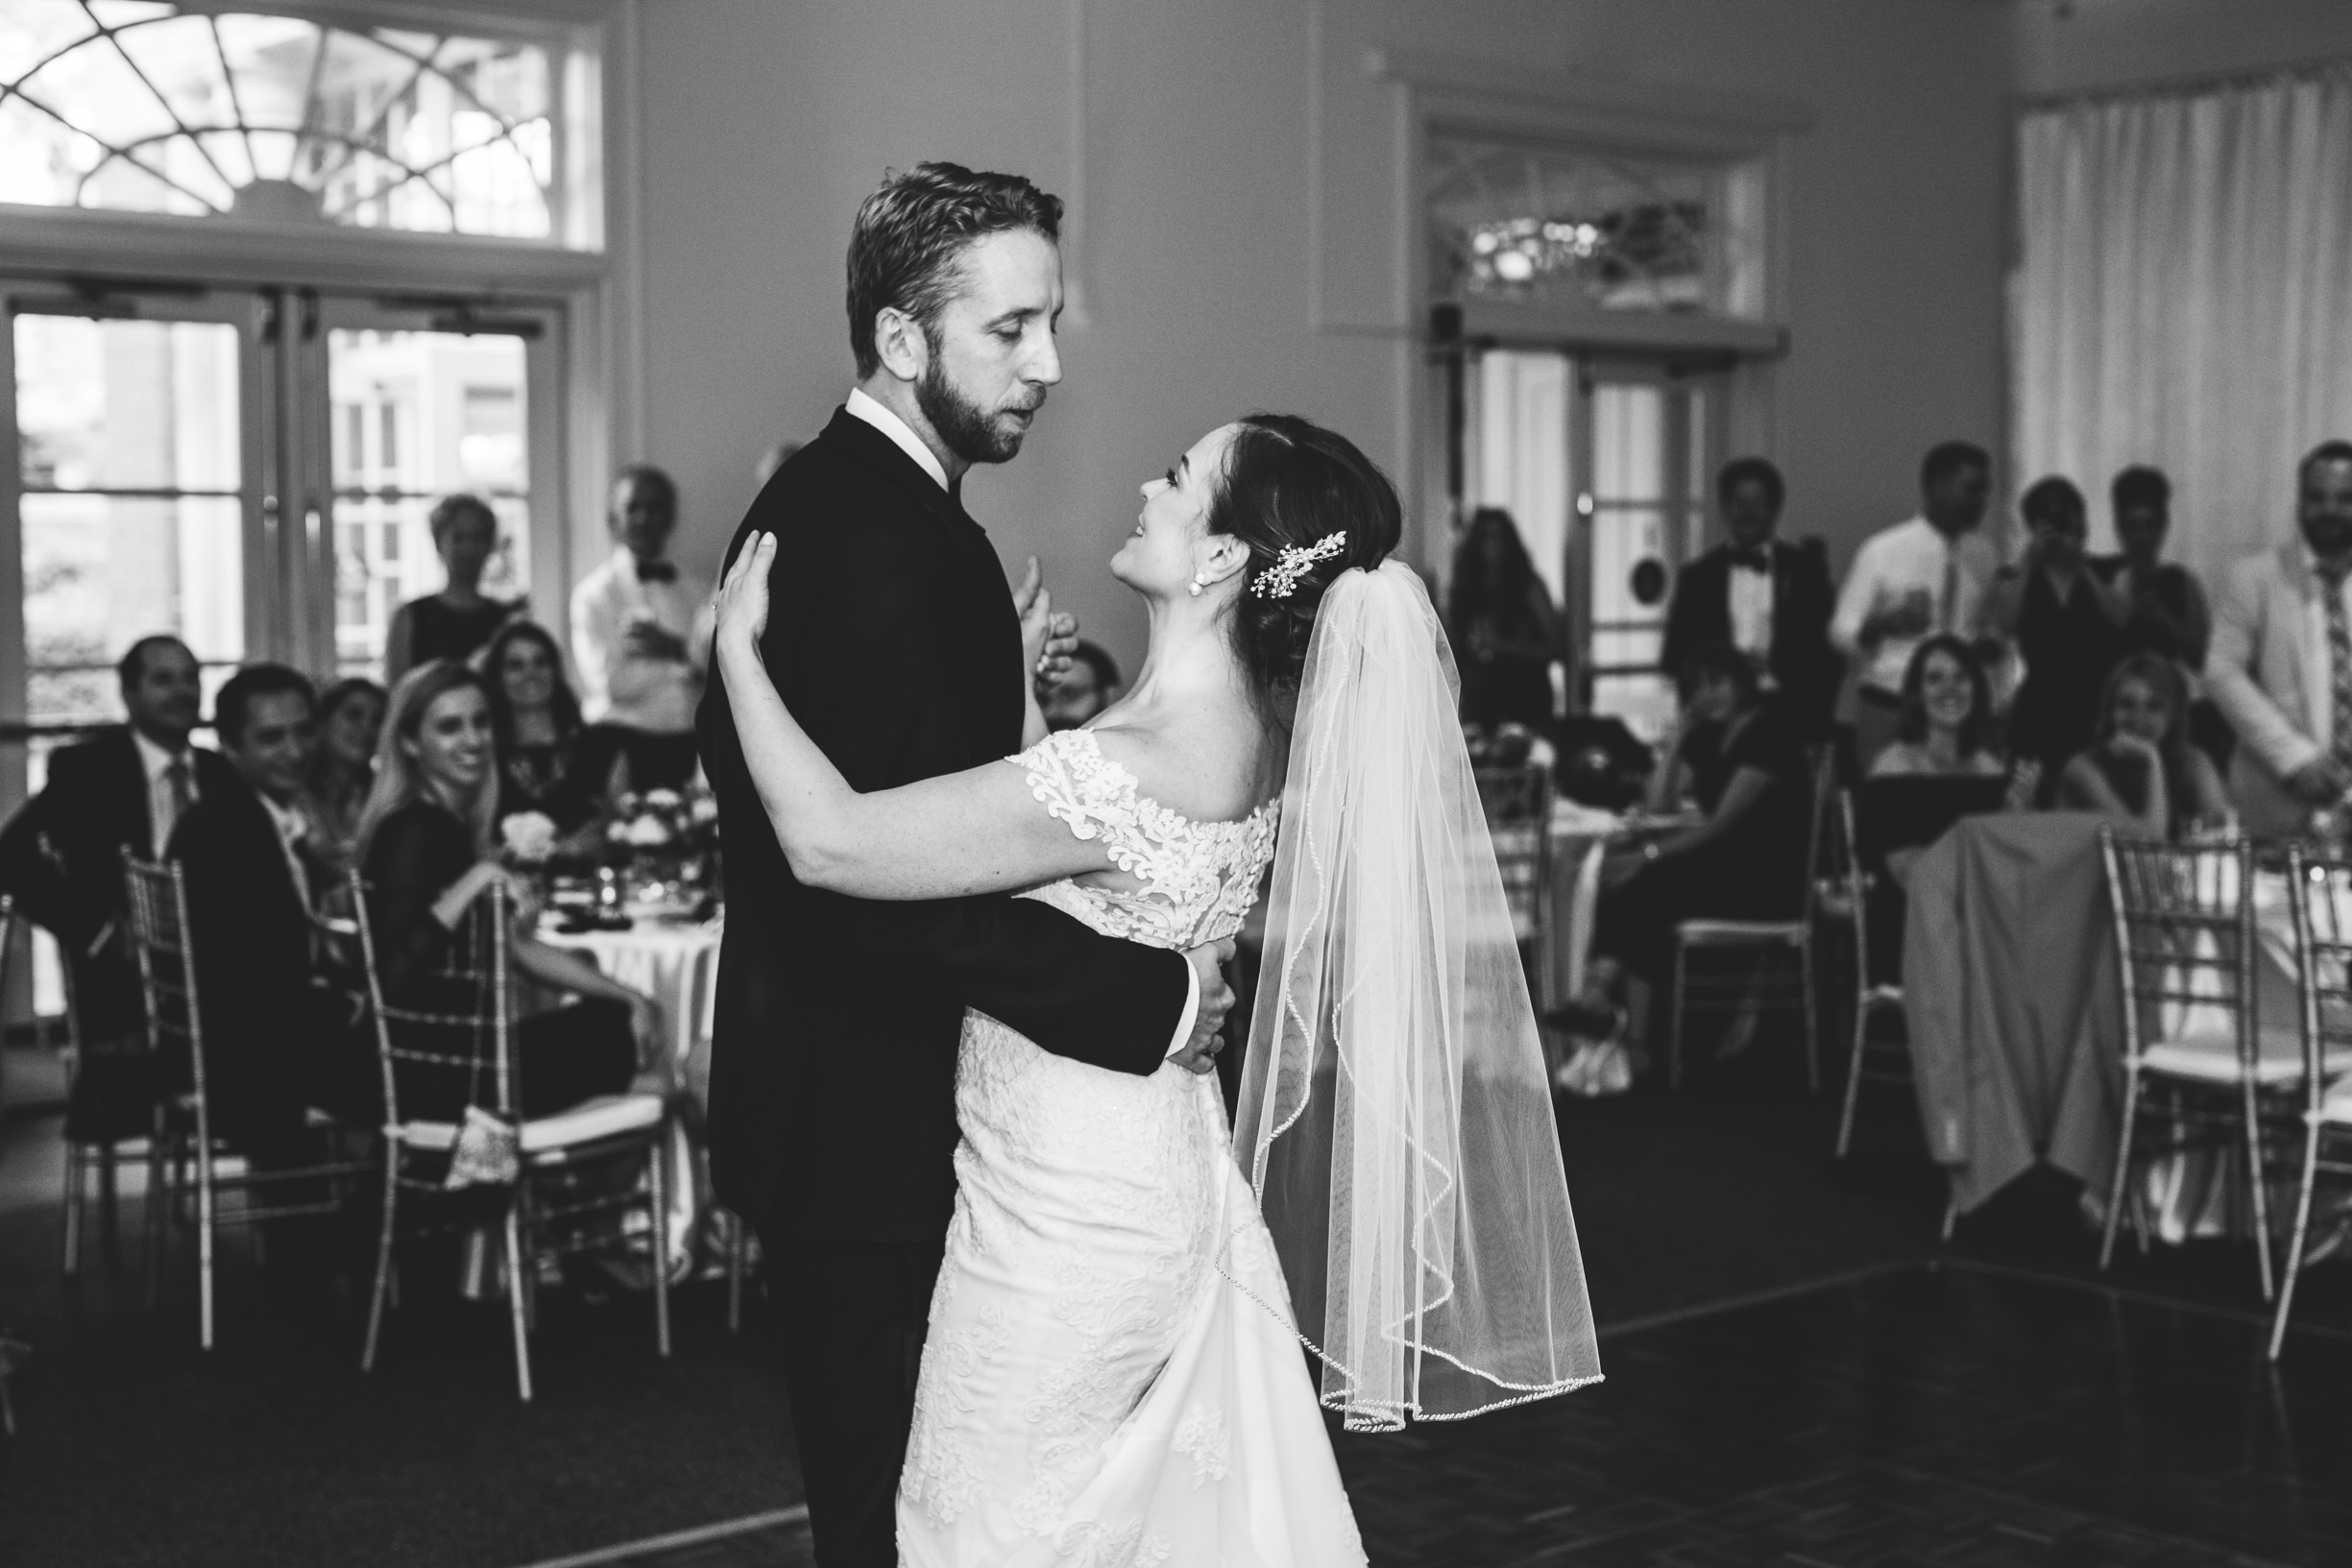 Crystal Ludwick Photo Louisvile Kentucky Louisville Photographer Wedding Photographer 2018  (127 of 164).jpg